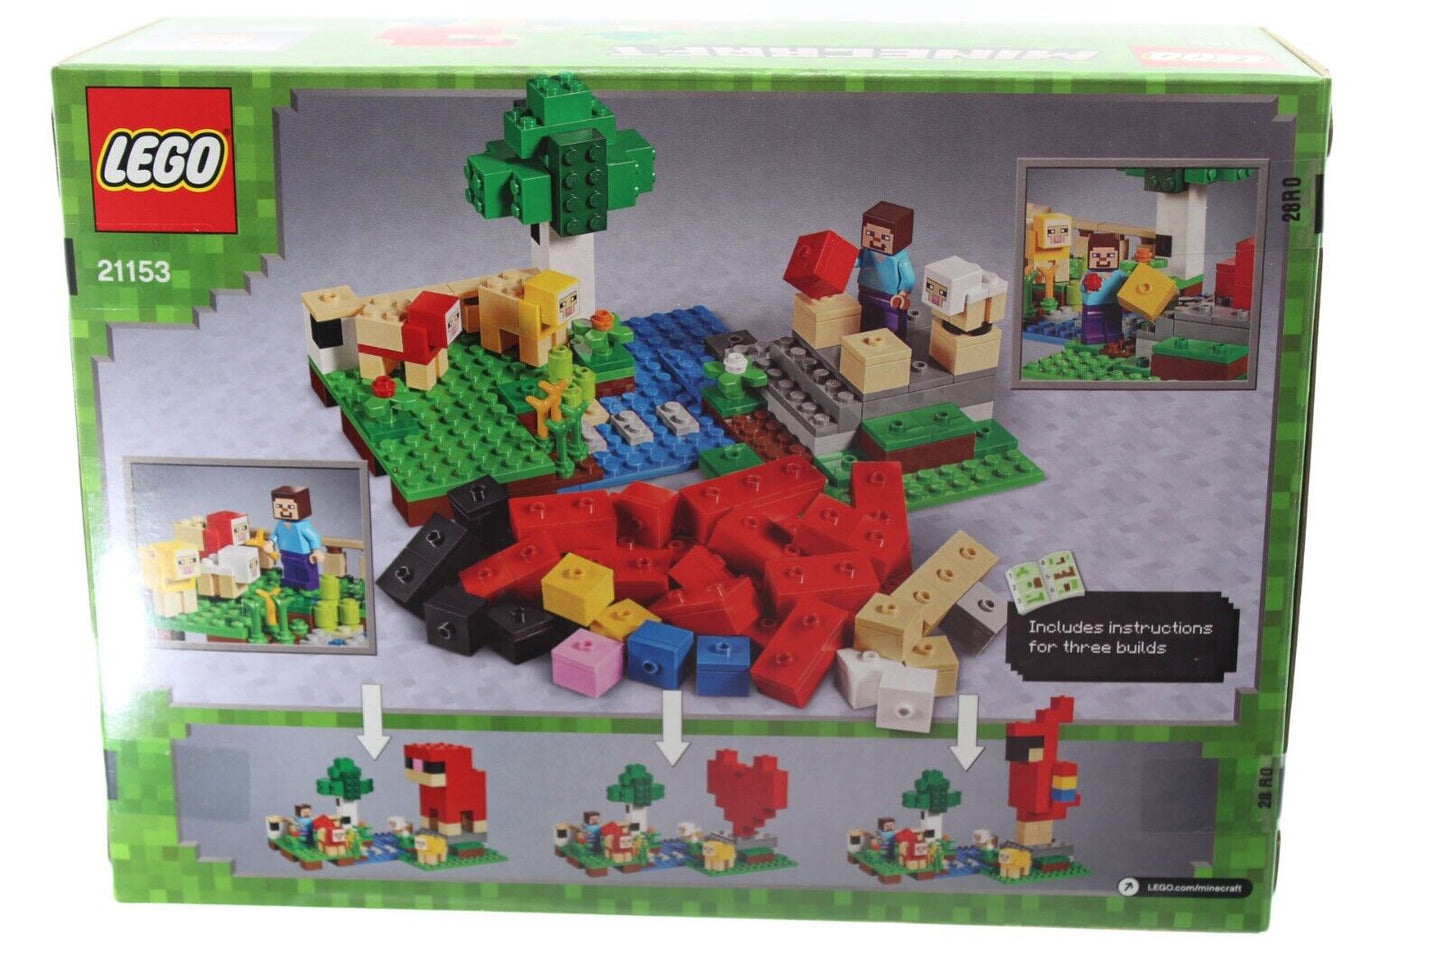 LEGO Minecraft The Wool Farm 21153 Building Kit (260 Pieces)